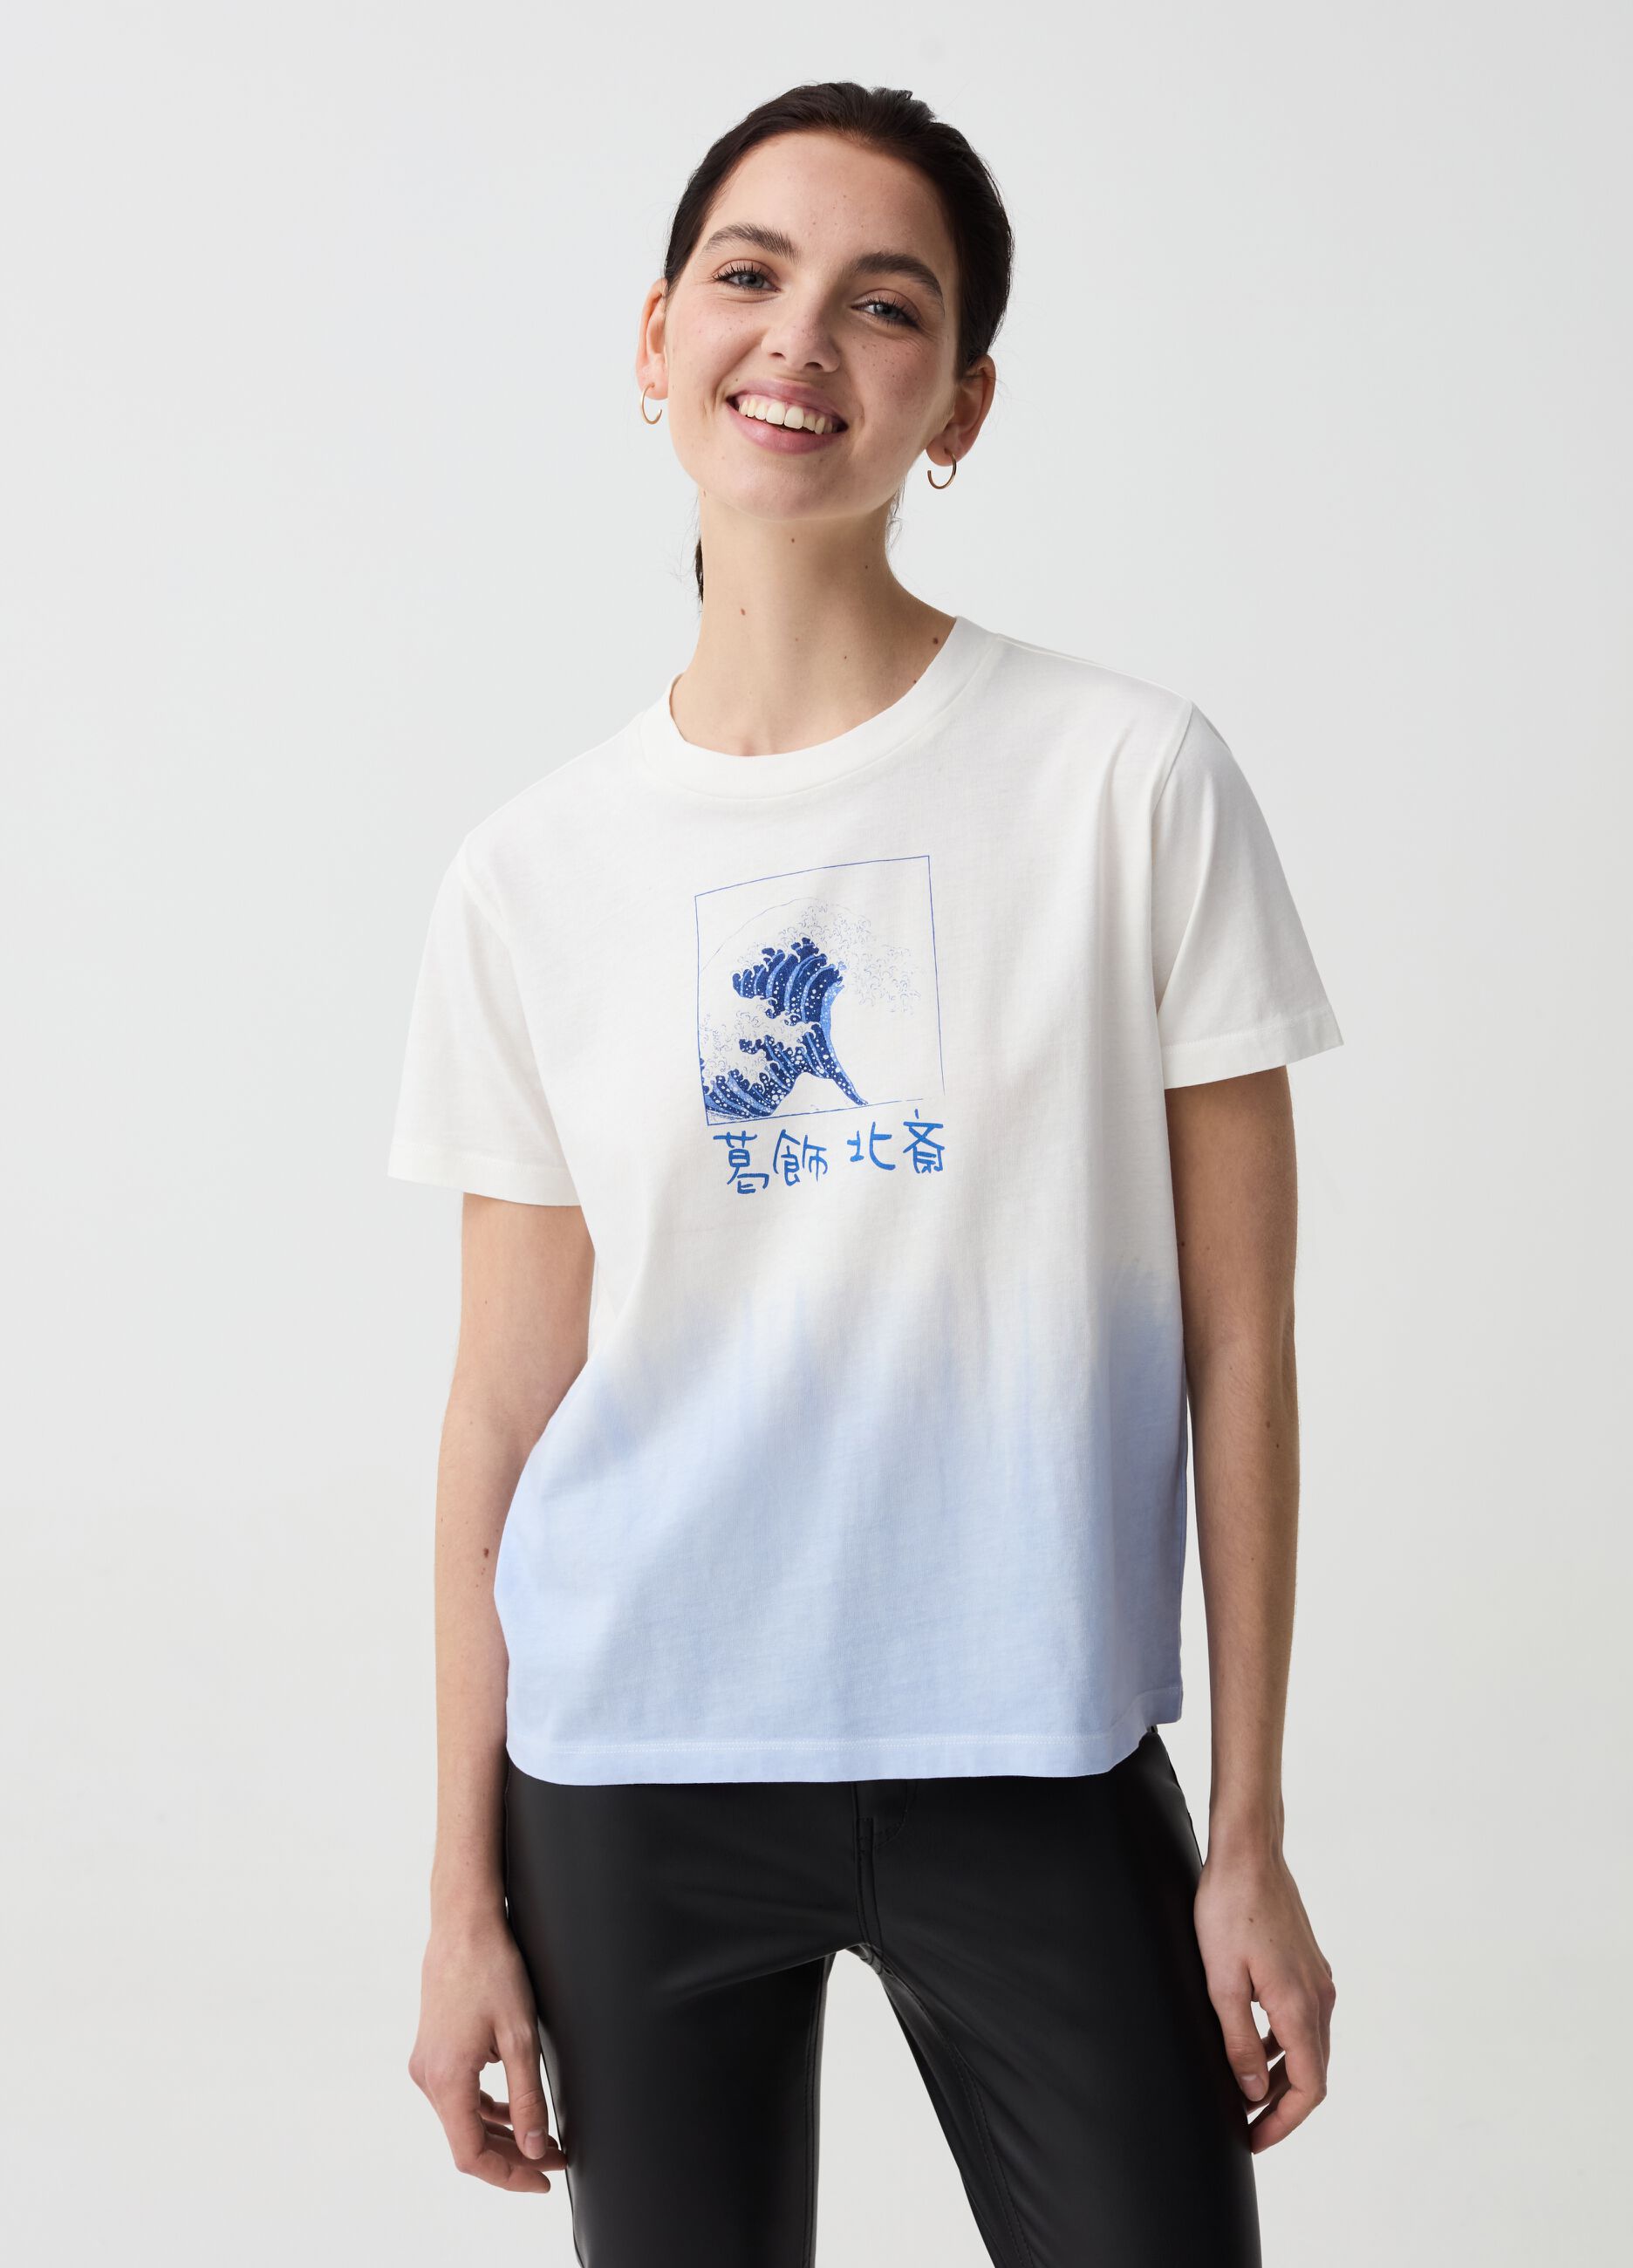 T-shirt con stampa dipinto La Grande Onda di Kanagawa